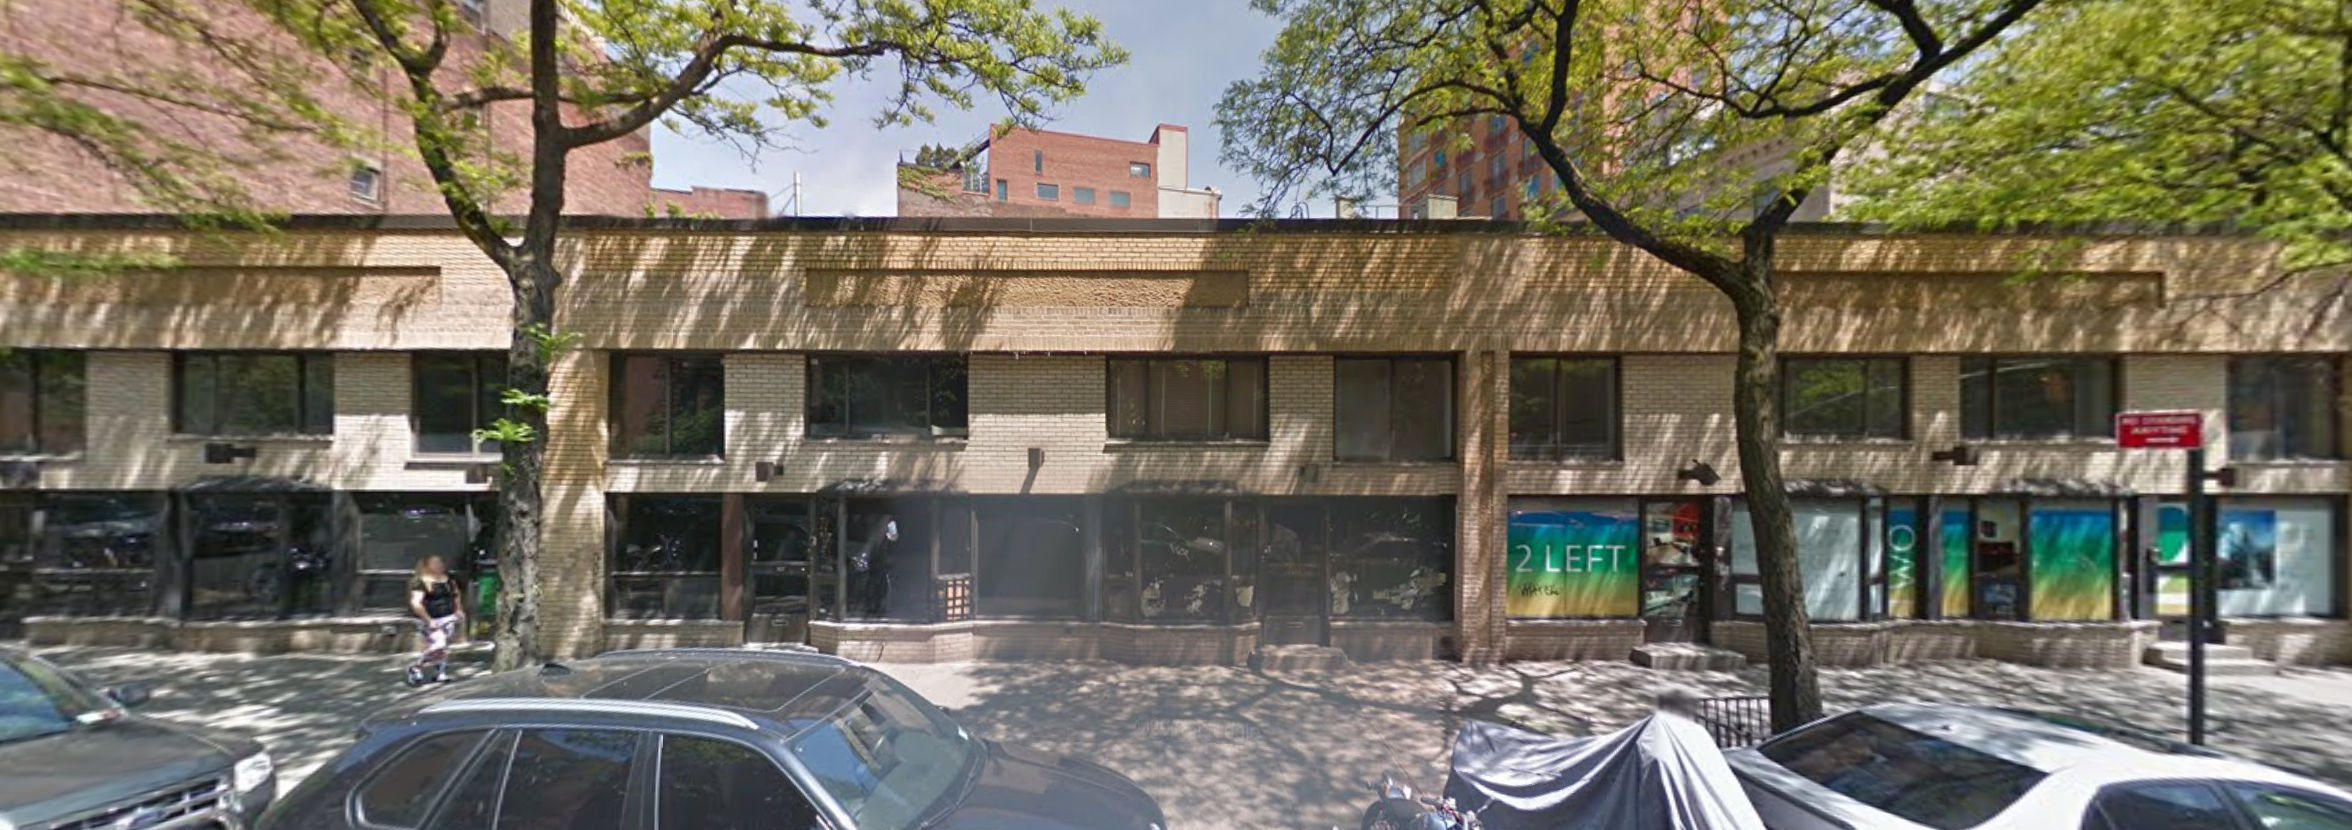 703 Washington Street, image via Google Maps